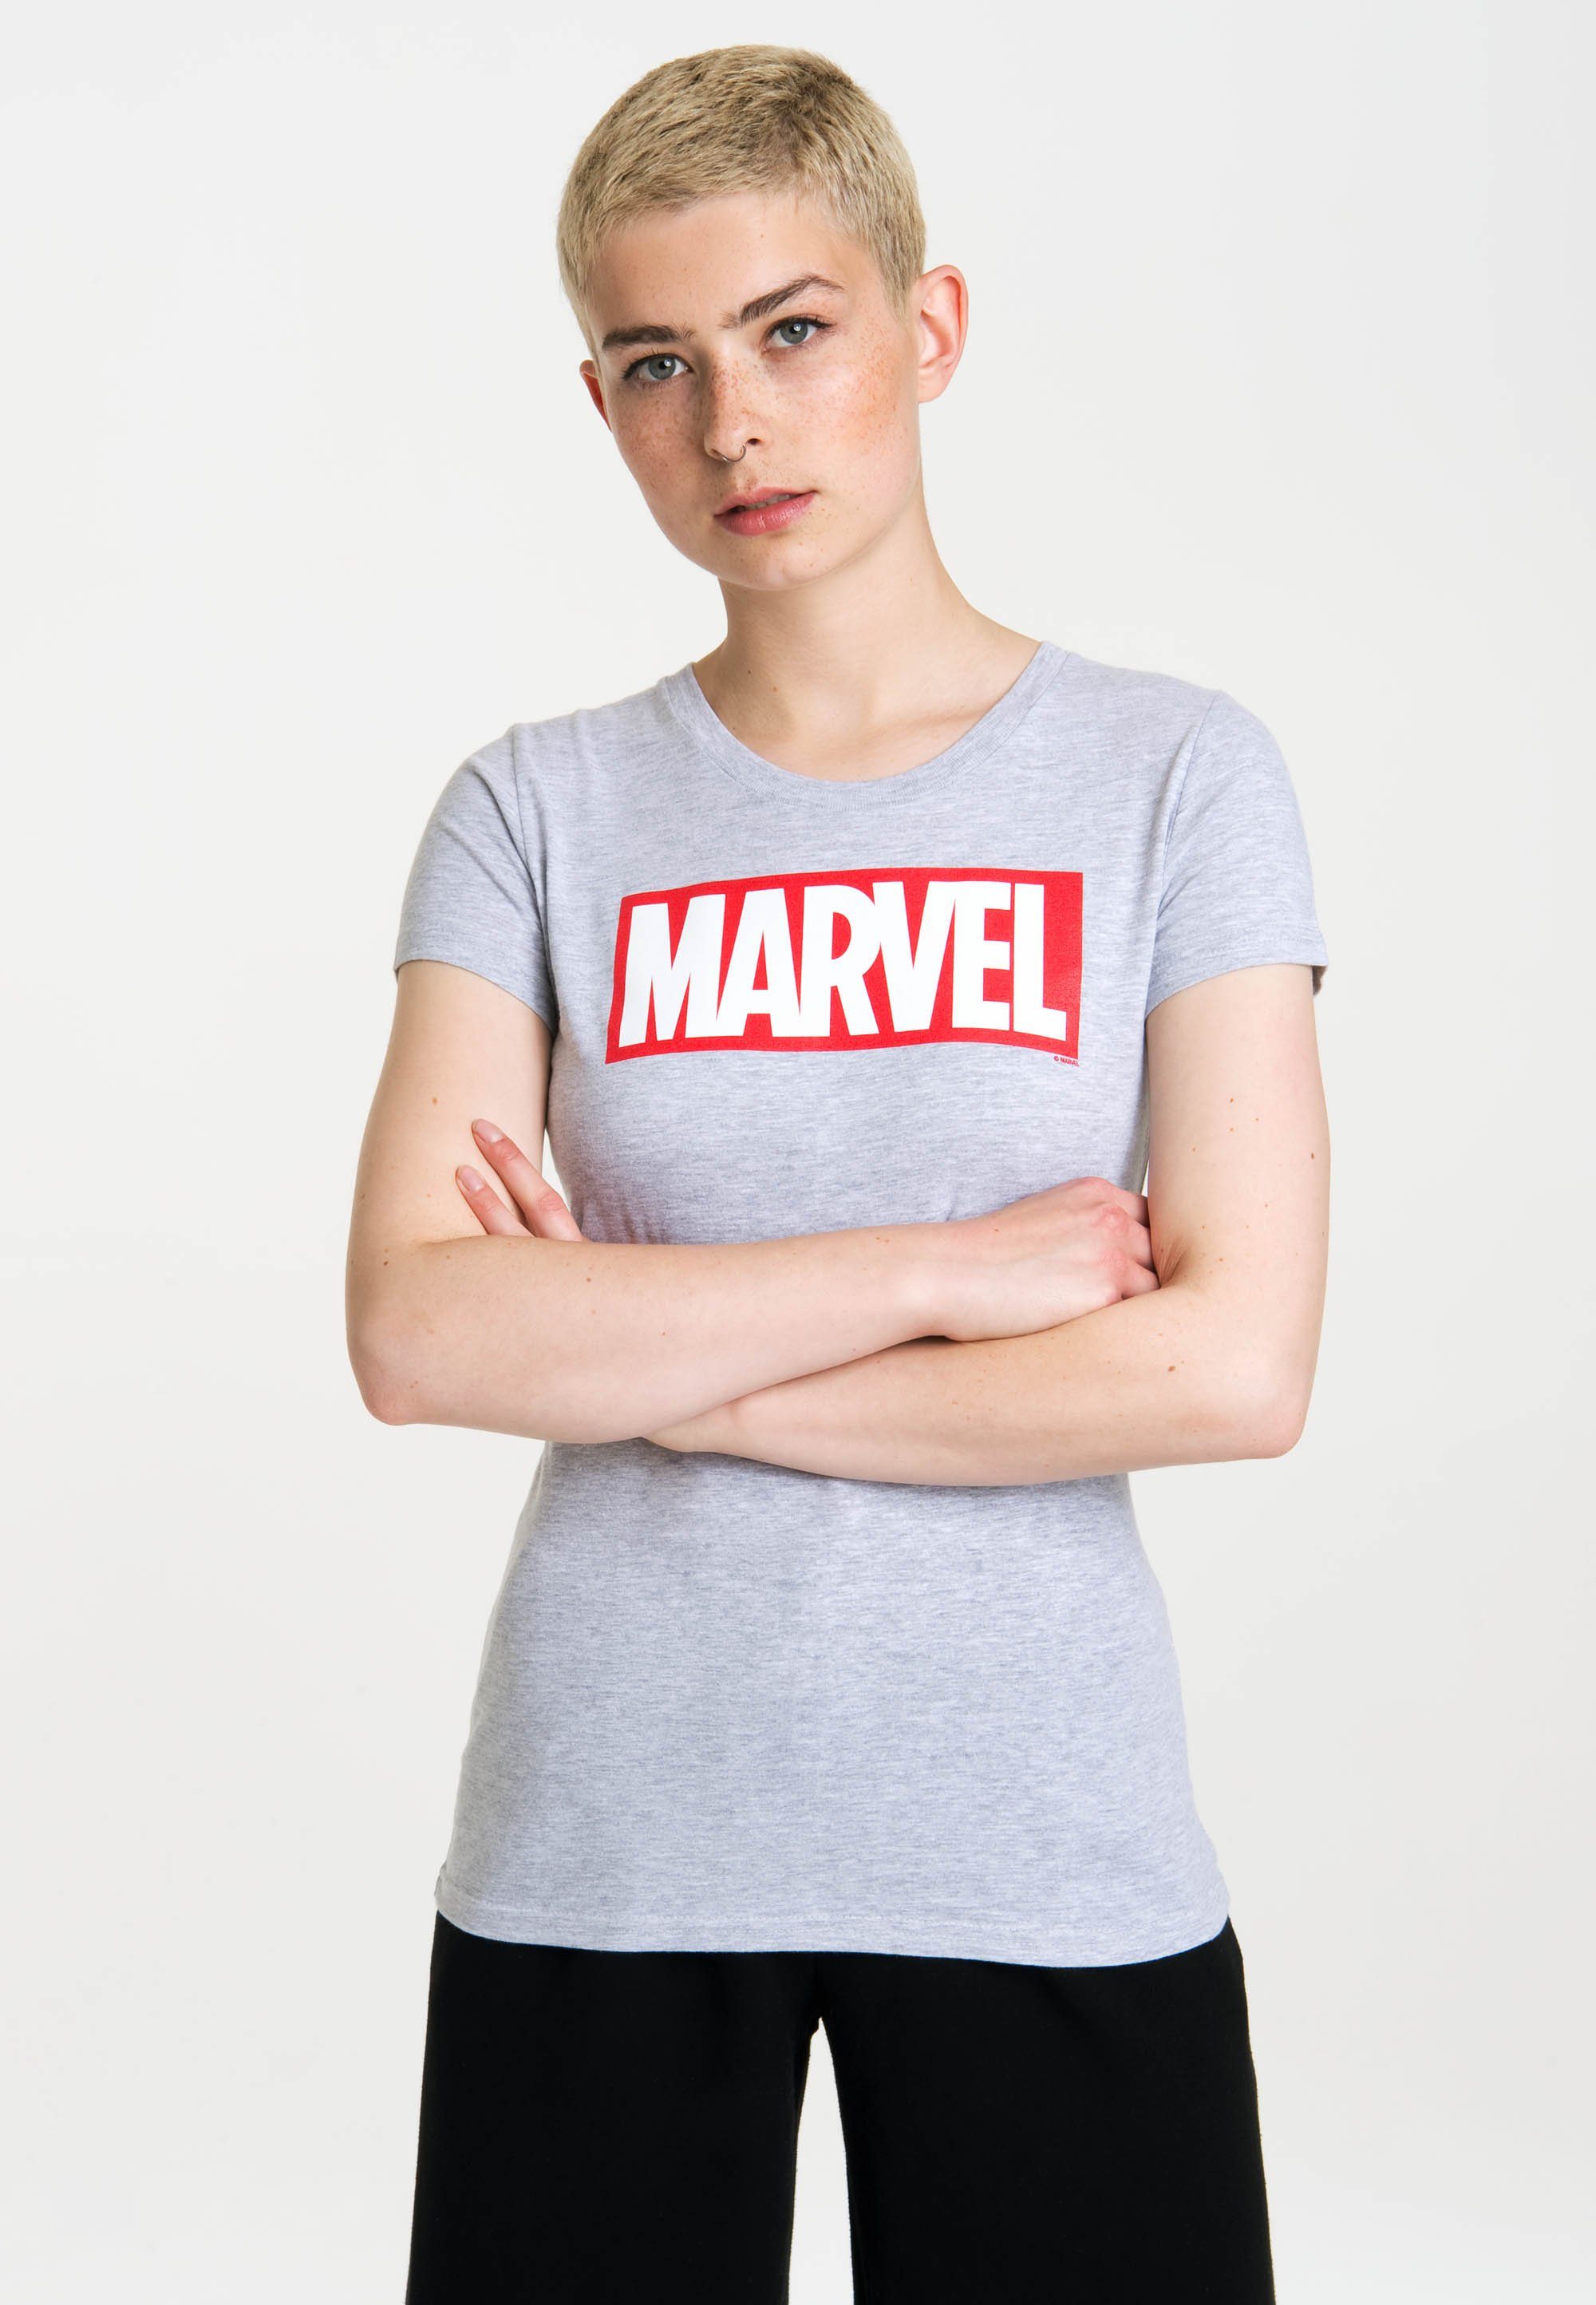 T-Shirt Logo lizenzierten LOGOSHIRT Originaldesign Marvel mit